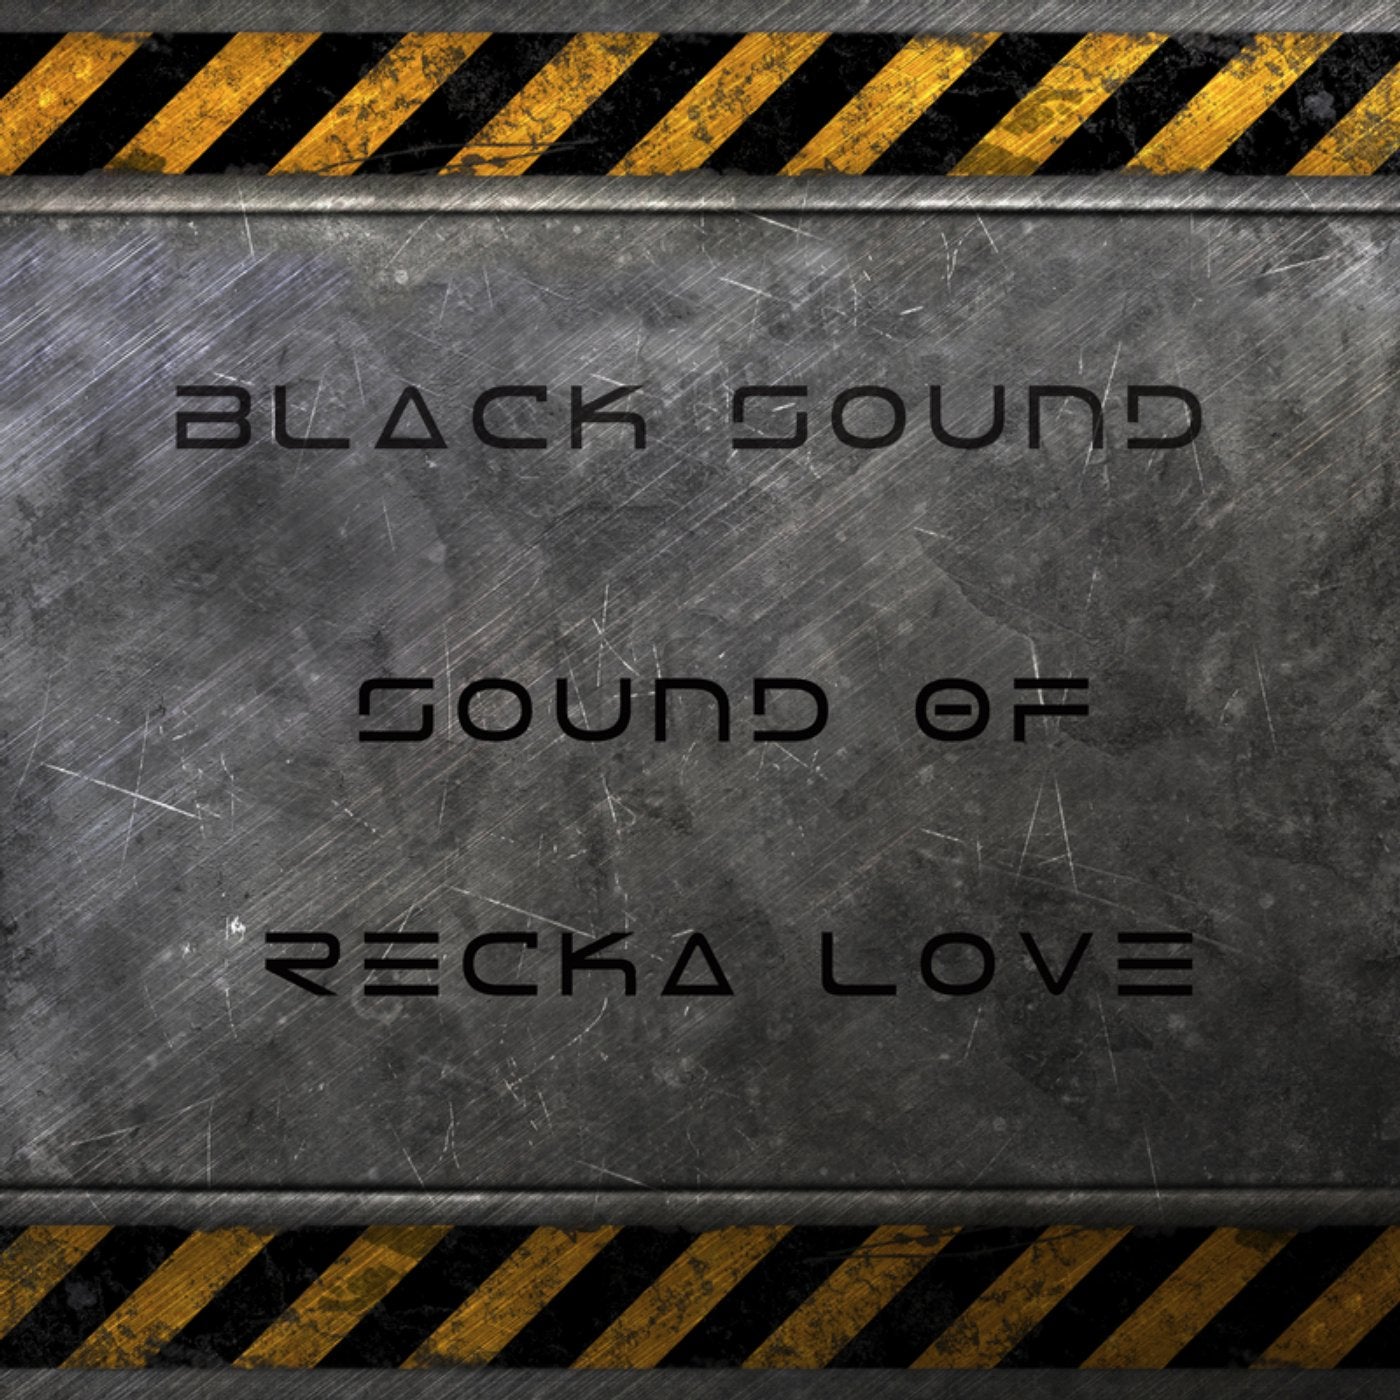 Sound of Recka Love